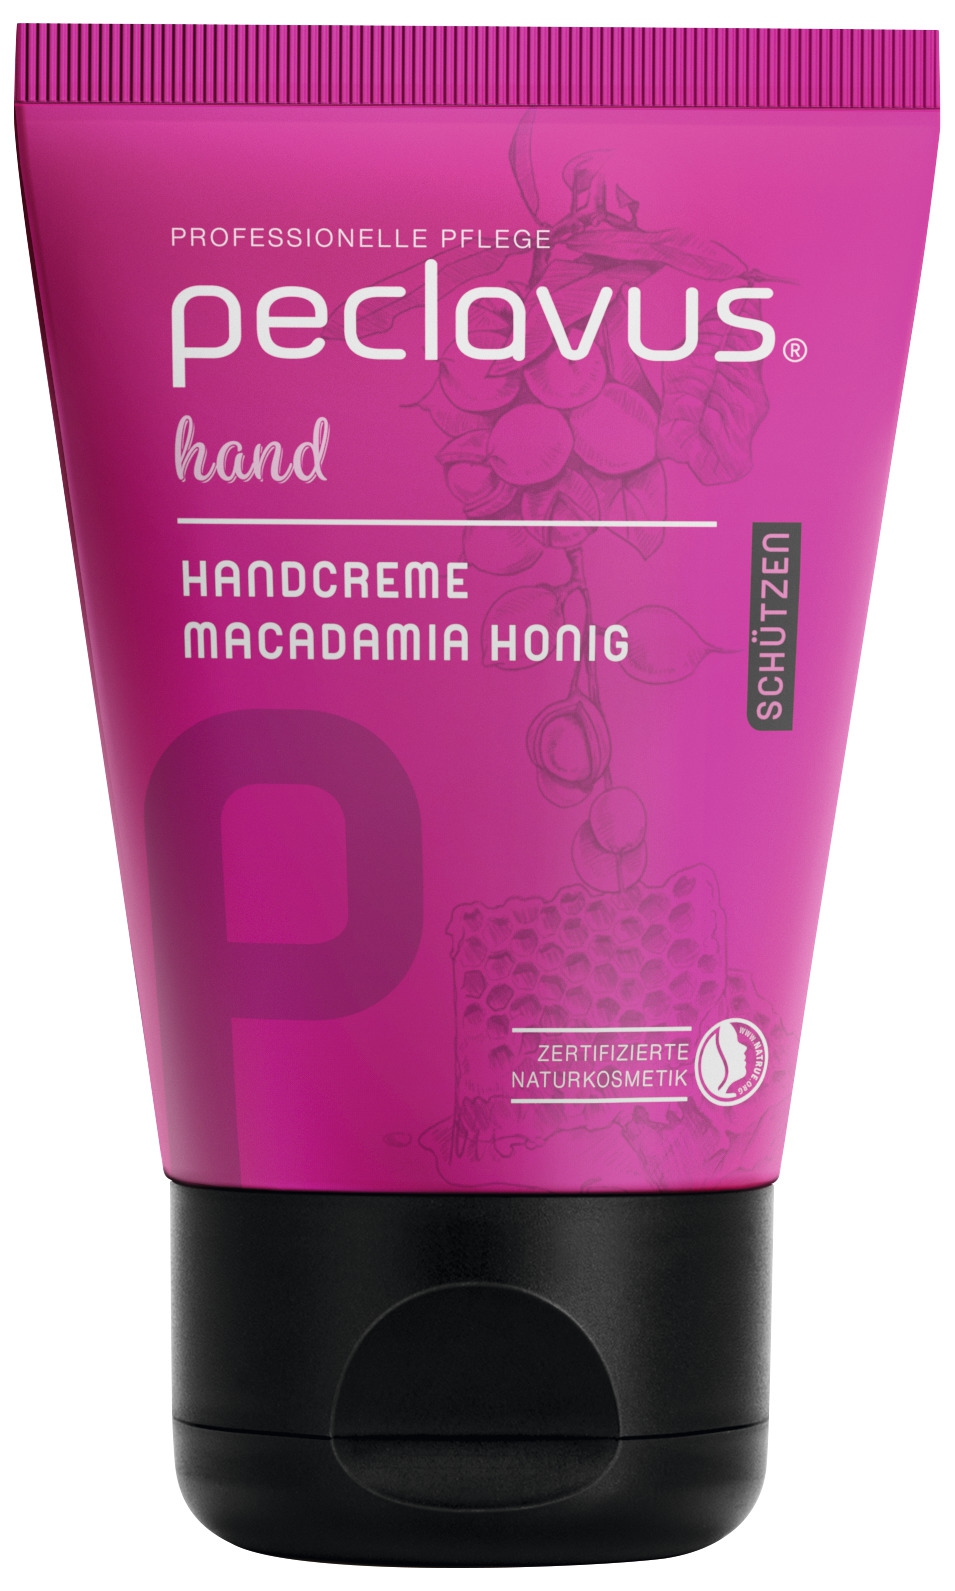 PECLAVUS Handcreme Macadamia Honig 30 ml | Schützen